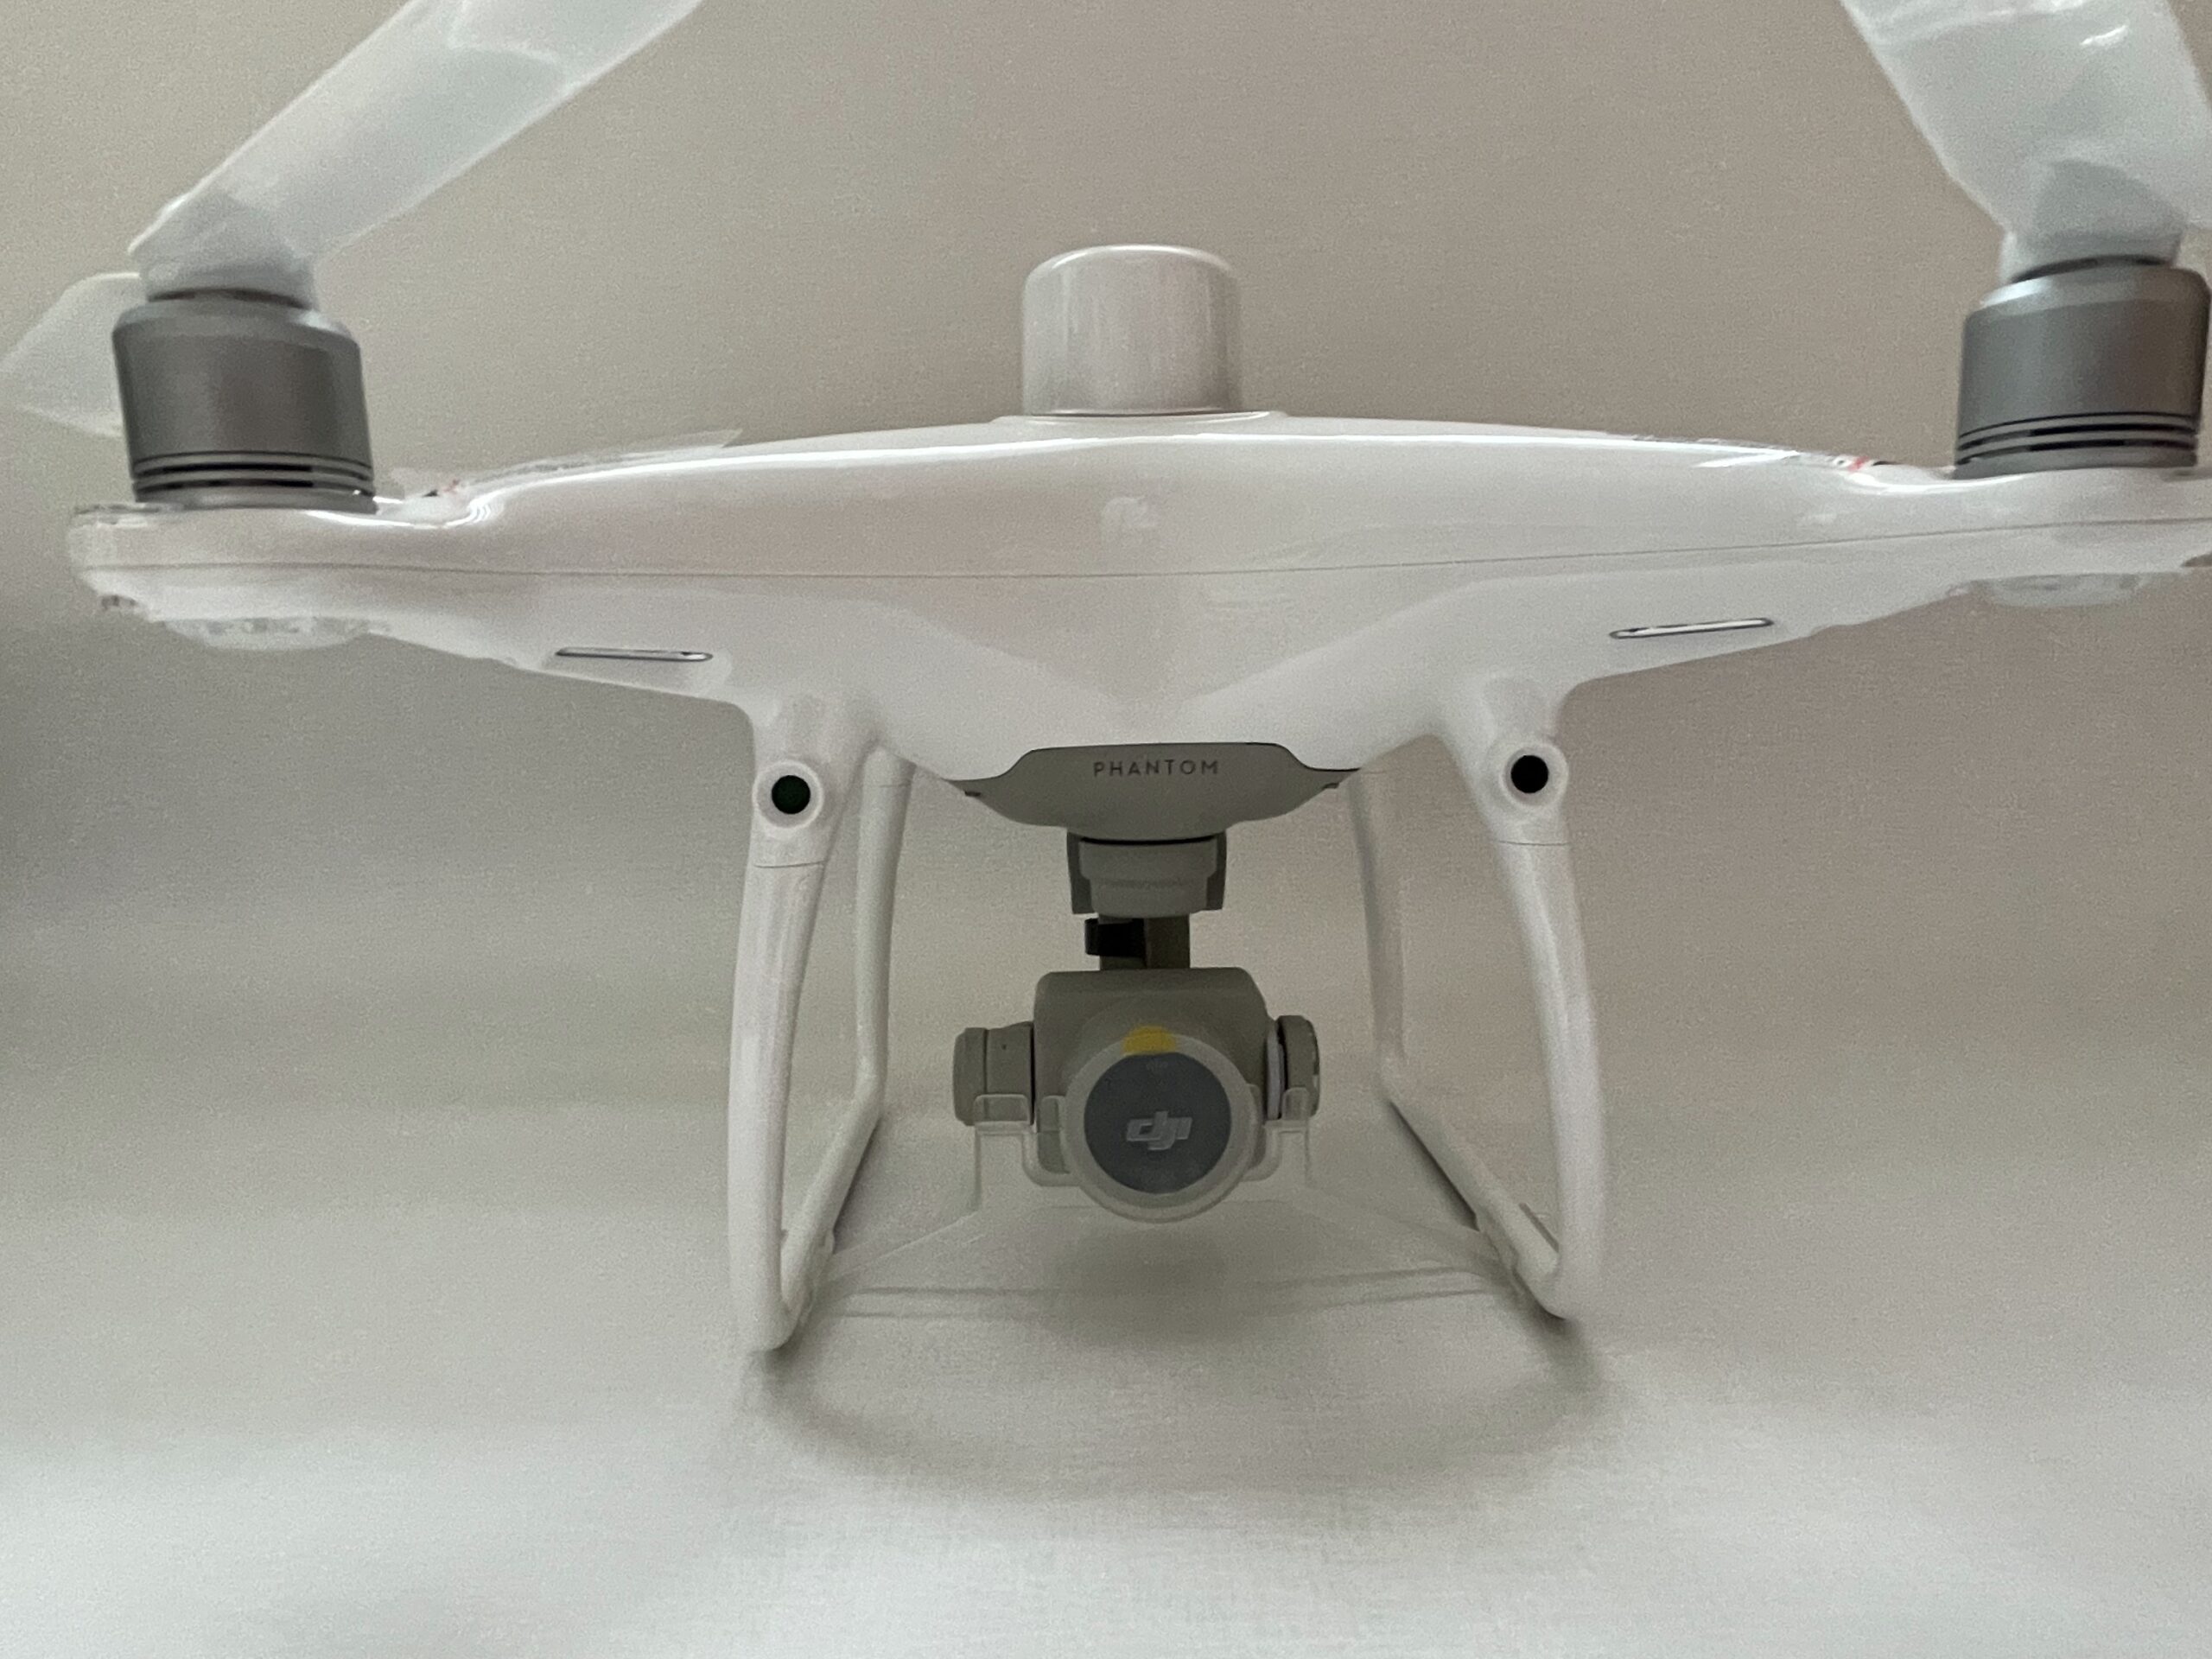 semiconductor bark nothing DJI Phantom 4 RTK - Used drone - Drone Parts Center